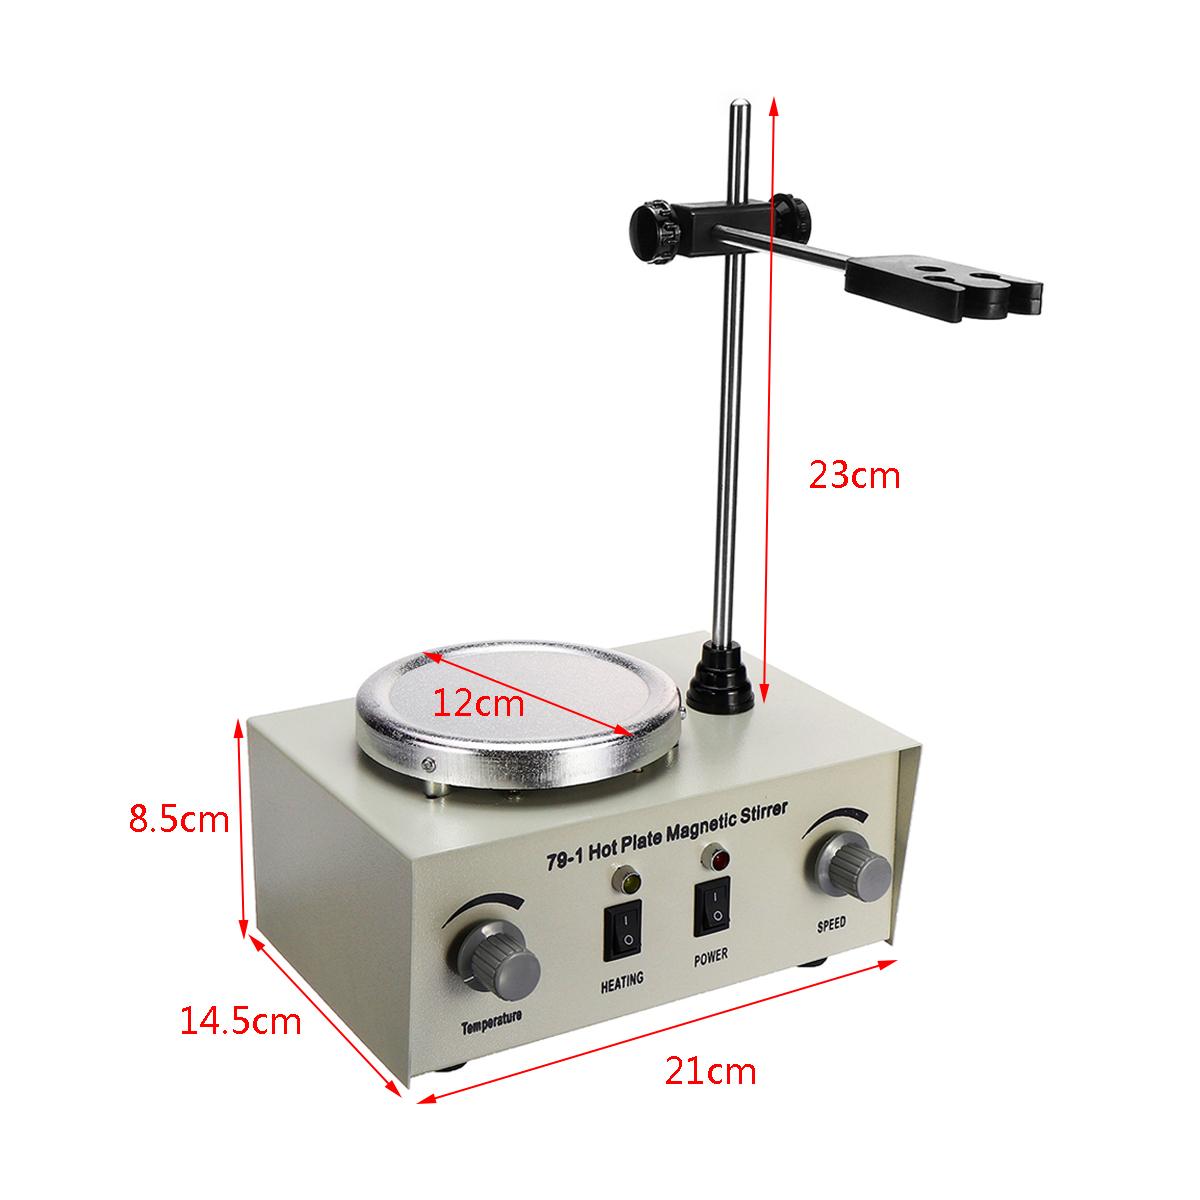 Lab Heating Dual Control Mixer US/AU/EU 79-1 110/220V 250W 1000ml Hot Plate Magnetic Stirrer No Noise/Vibration Fuses Protection